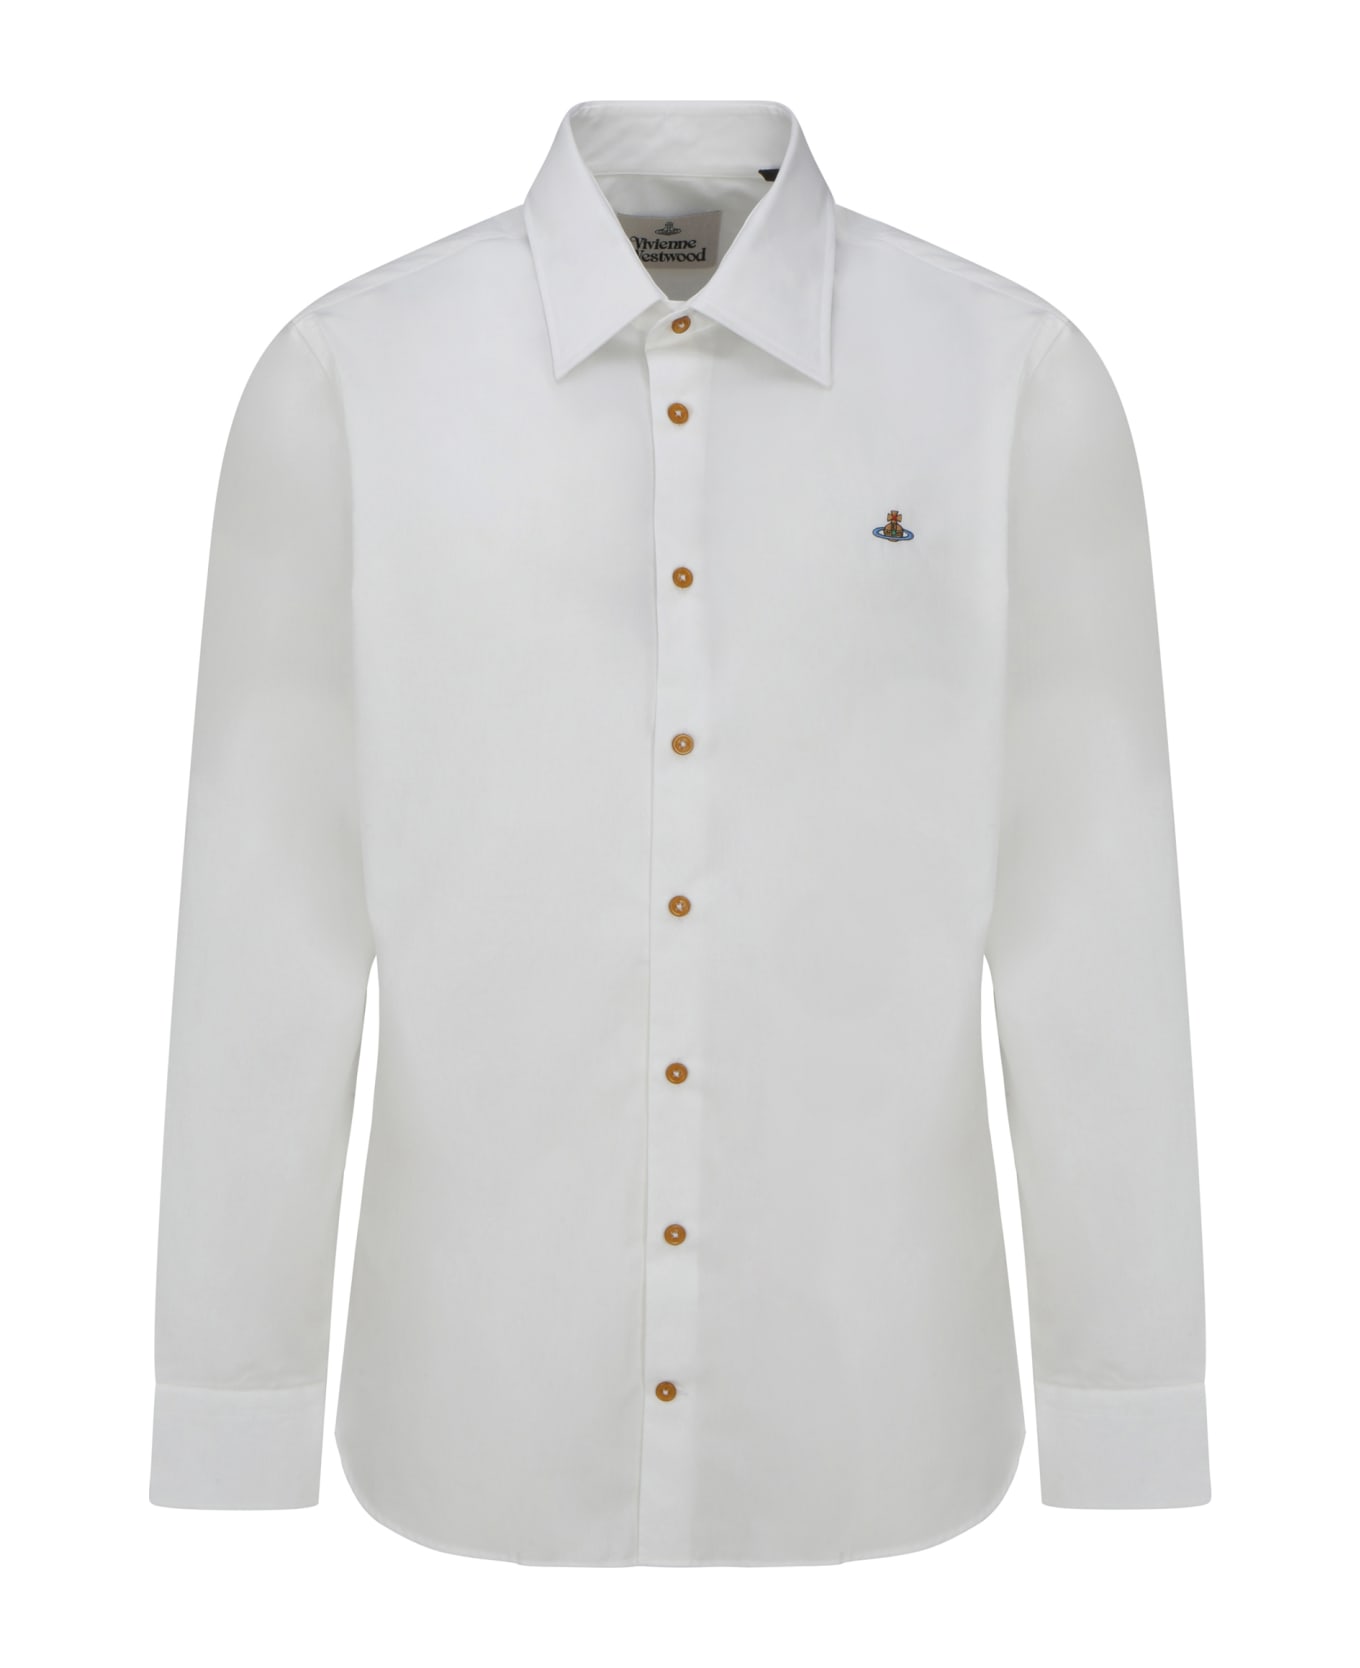 Vivienne Westwood Ghost Shirt - White シャツ